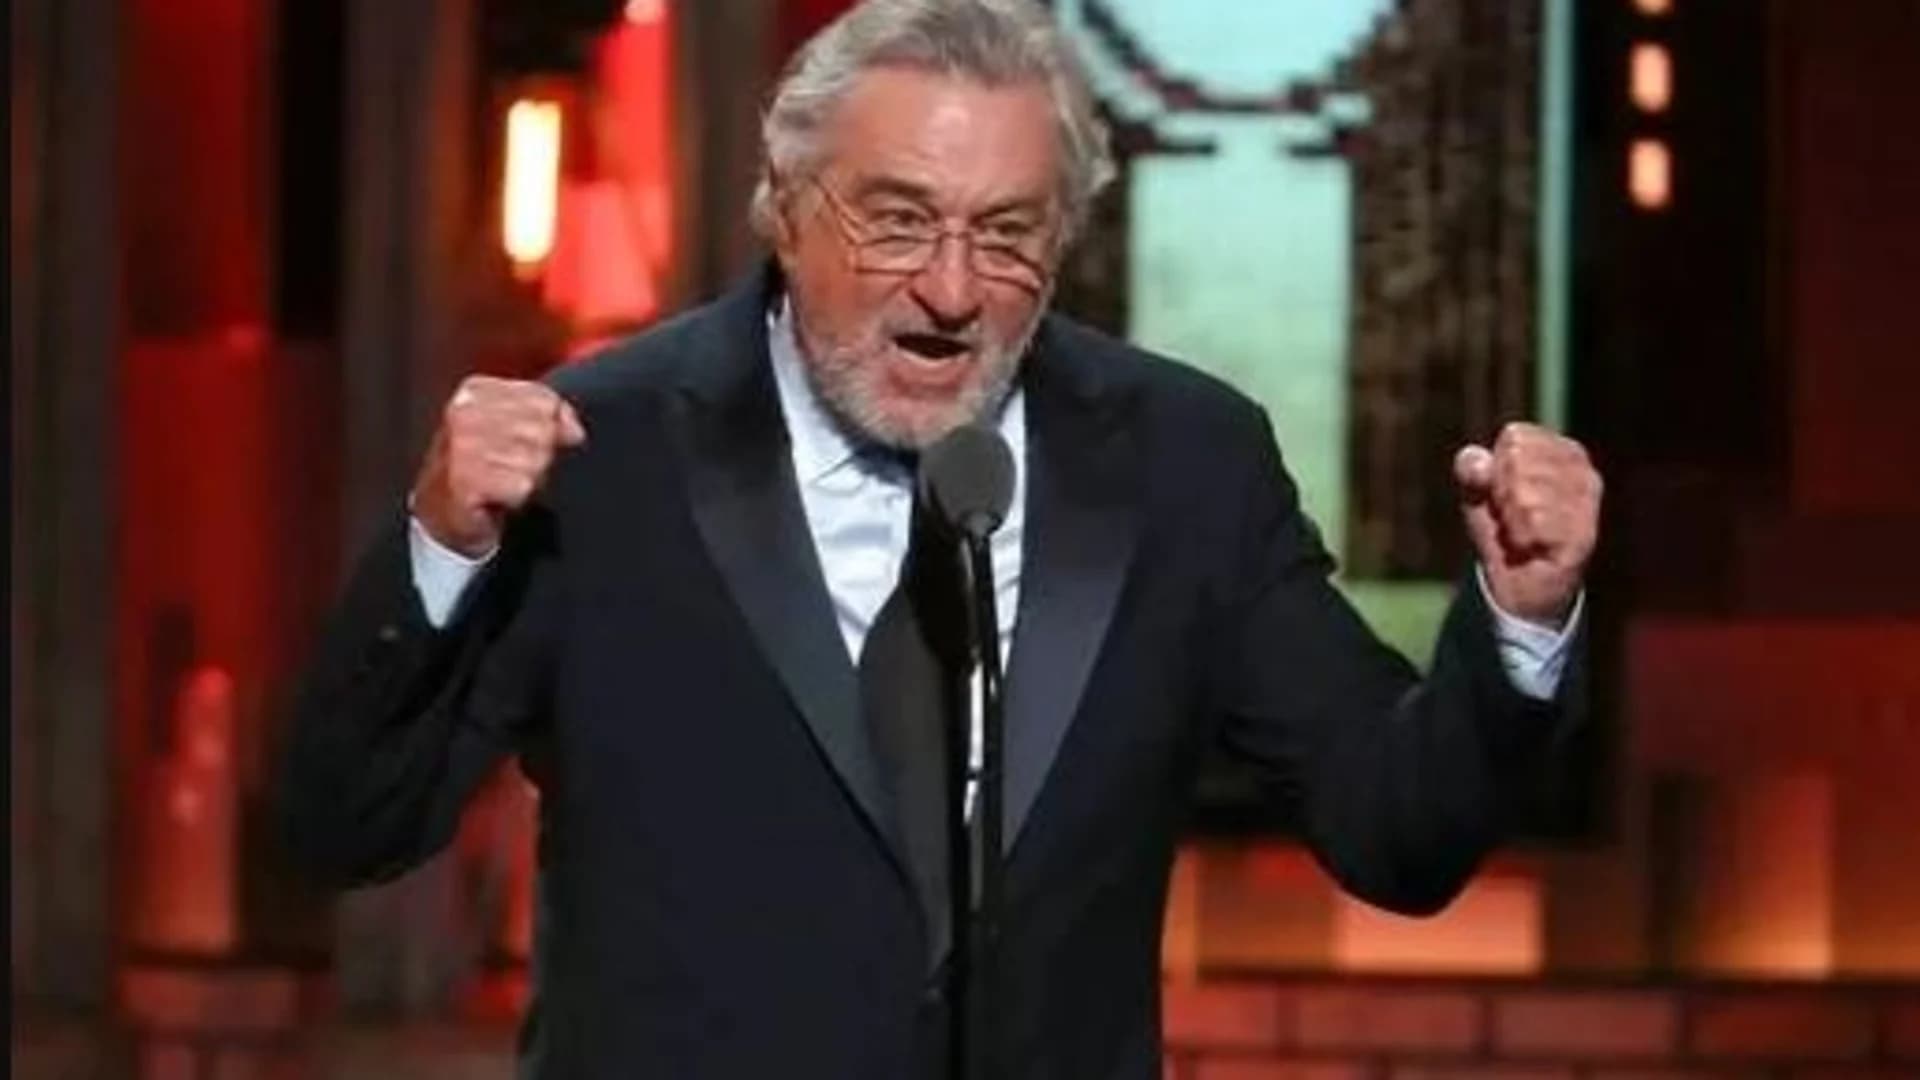 President Trump slams Robert De Niro as 'a very Low IQ individual'